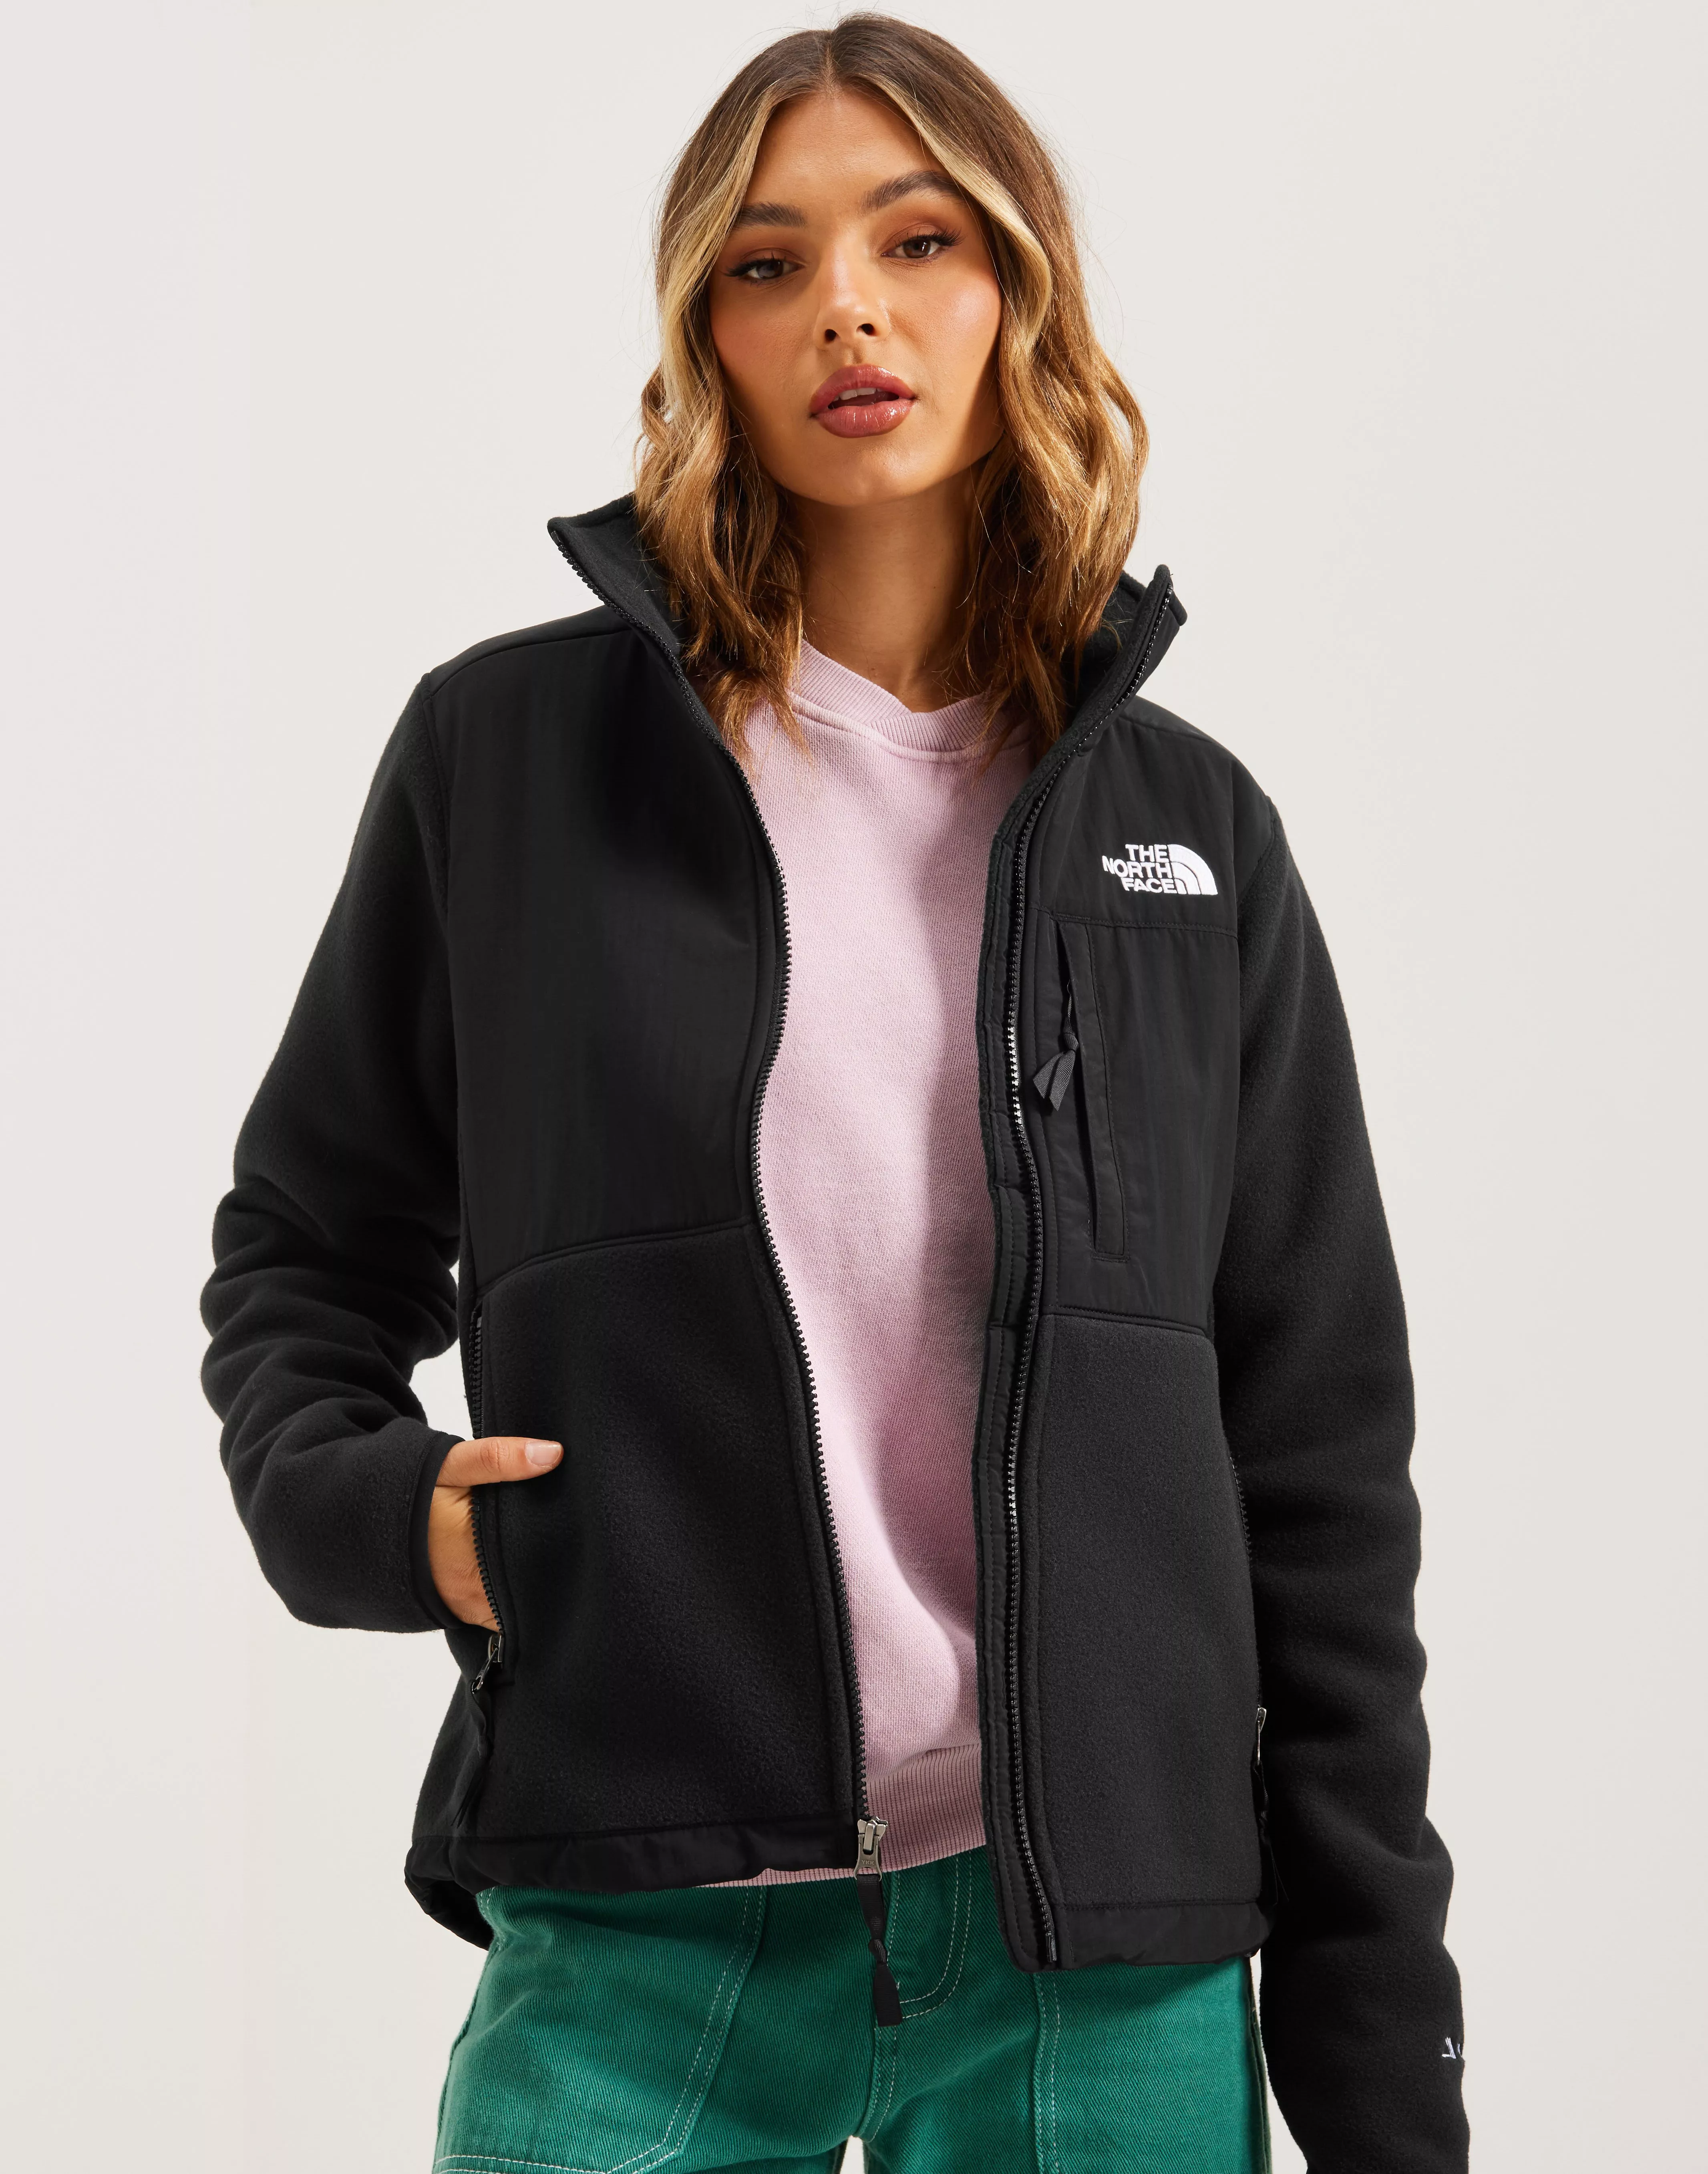 Buy The North Face Women's Denali Jacket - Black